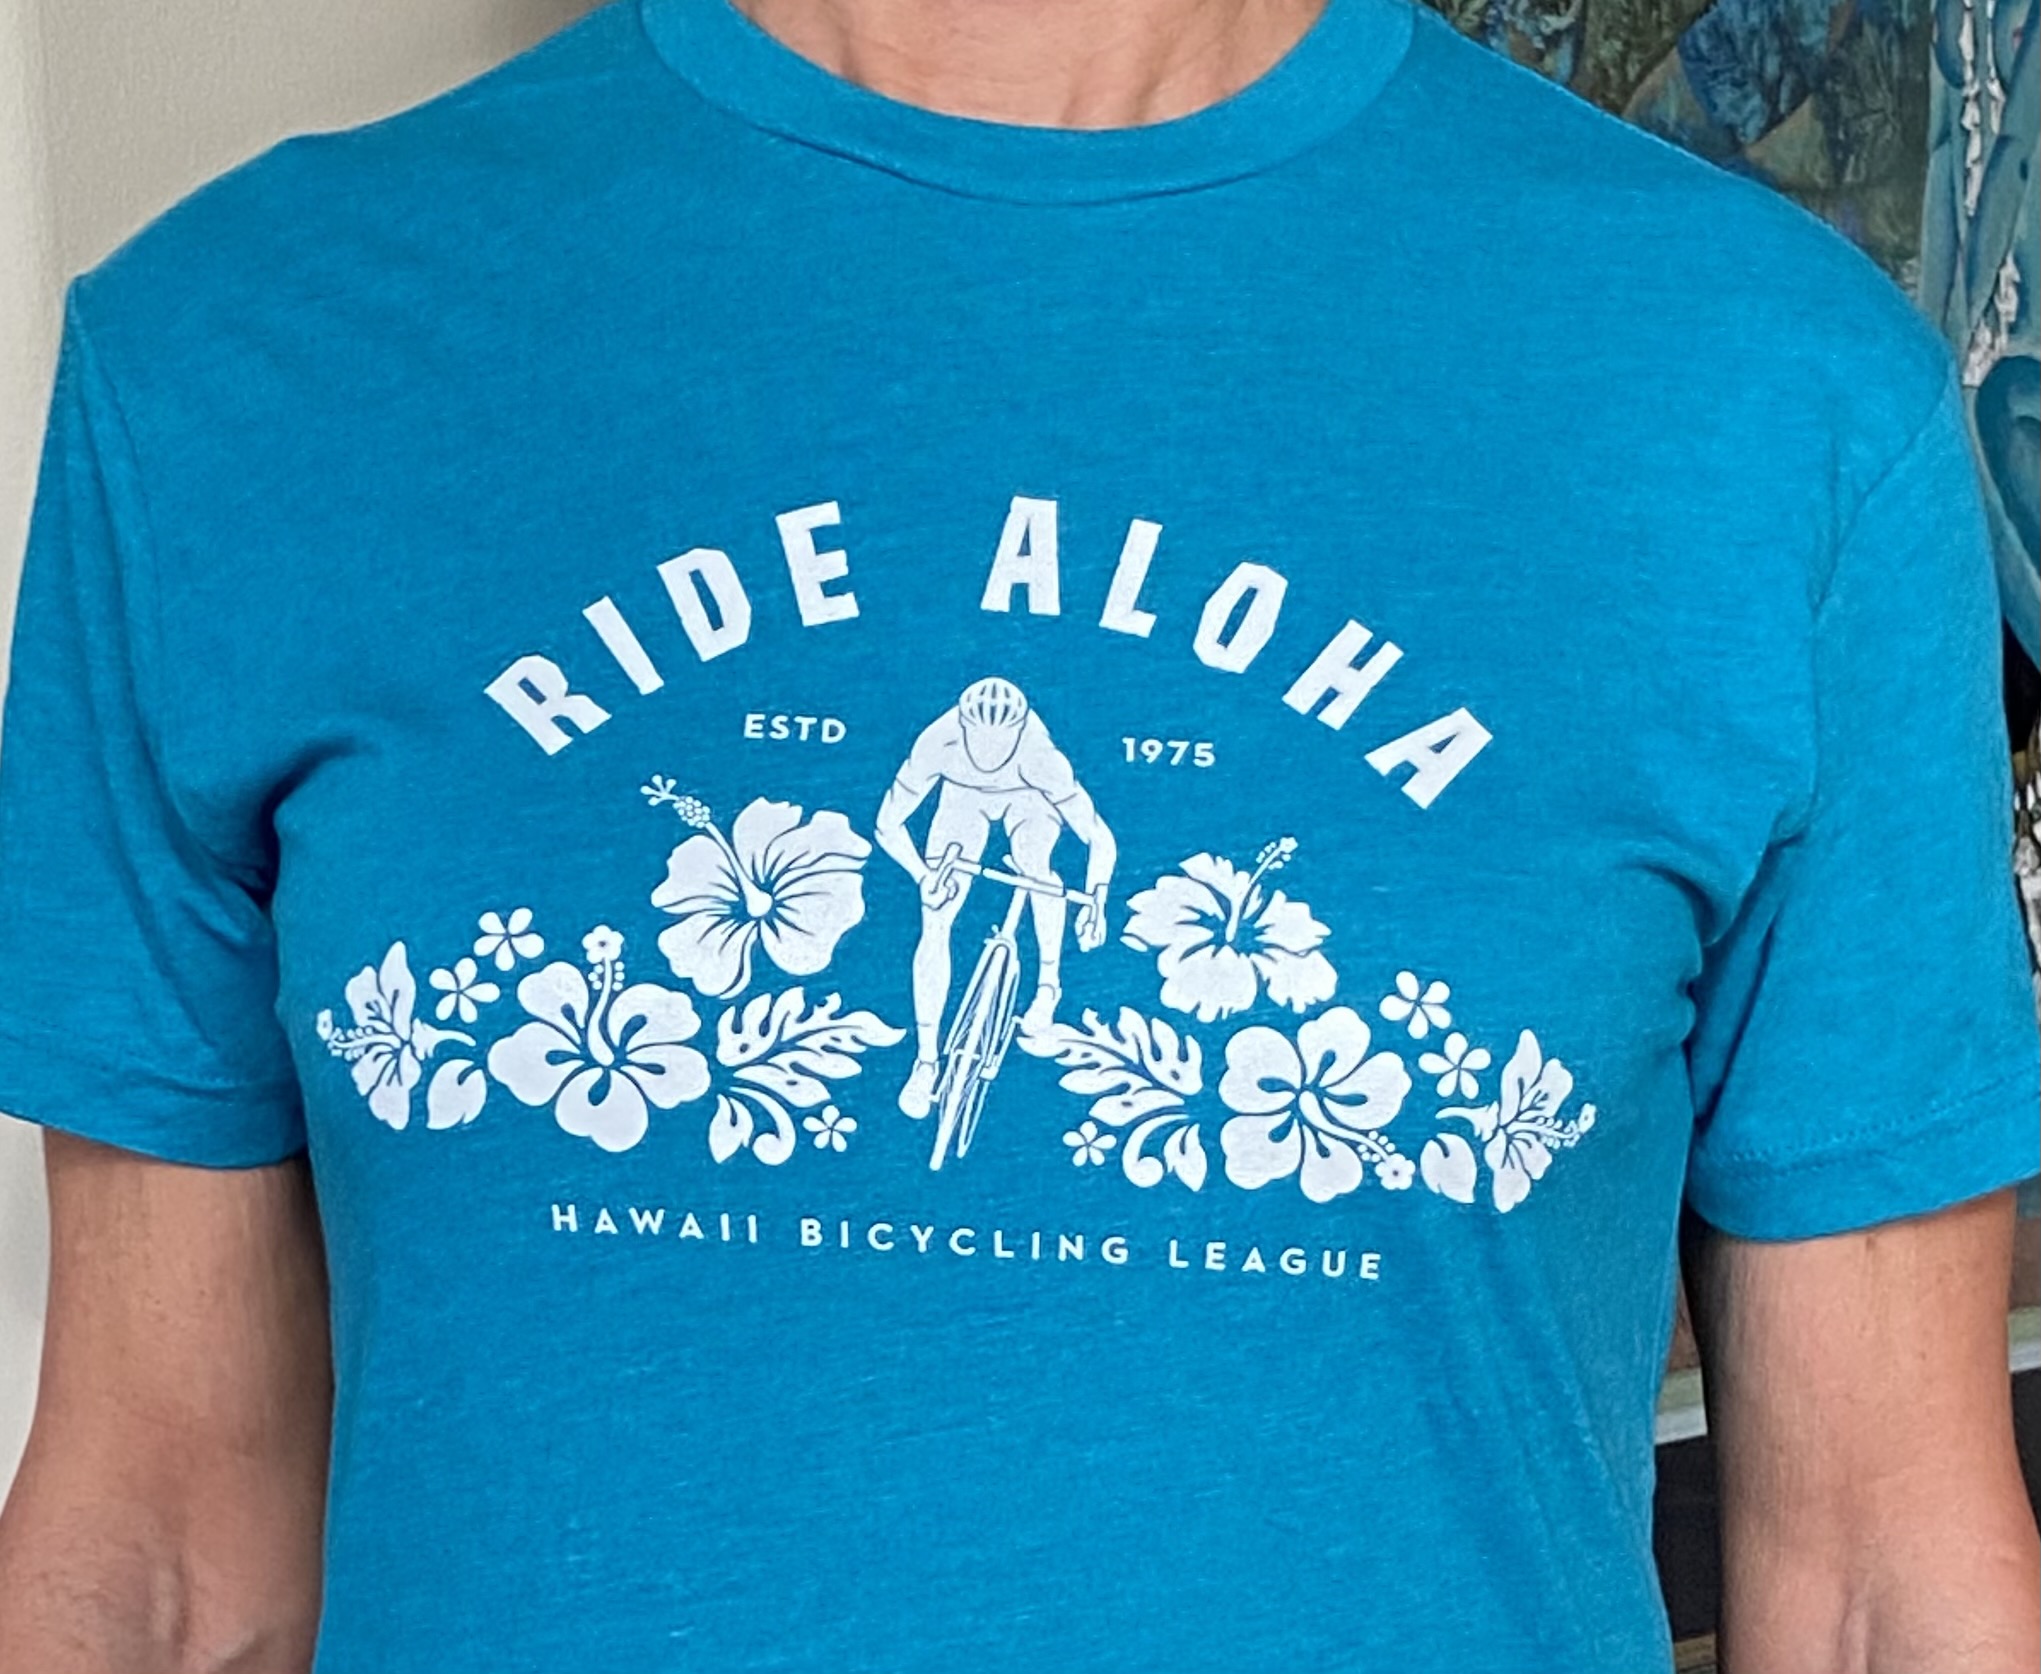 Spytte Konflikt Picket Ride Aloha T-shirt - Hawaii Bicycling League